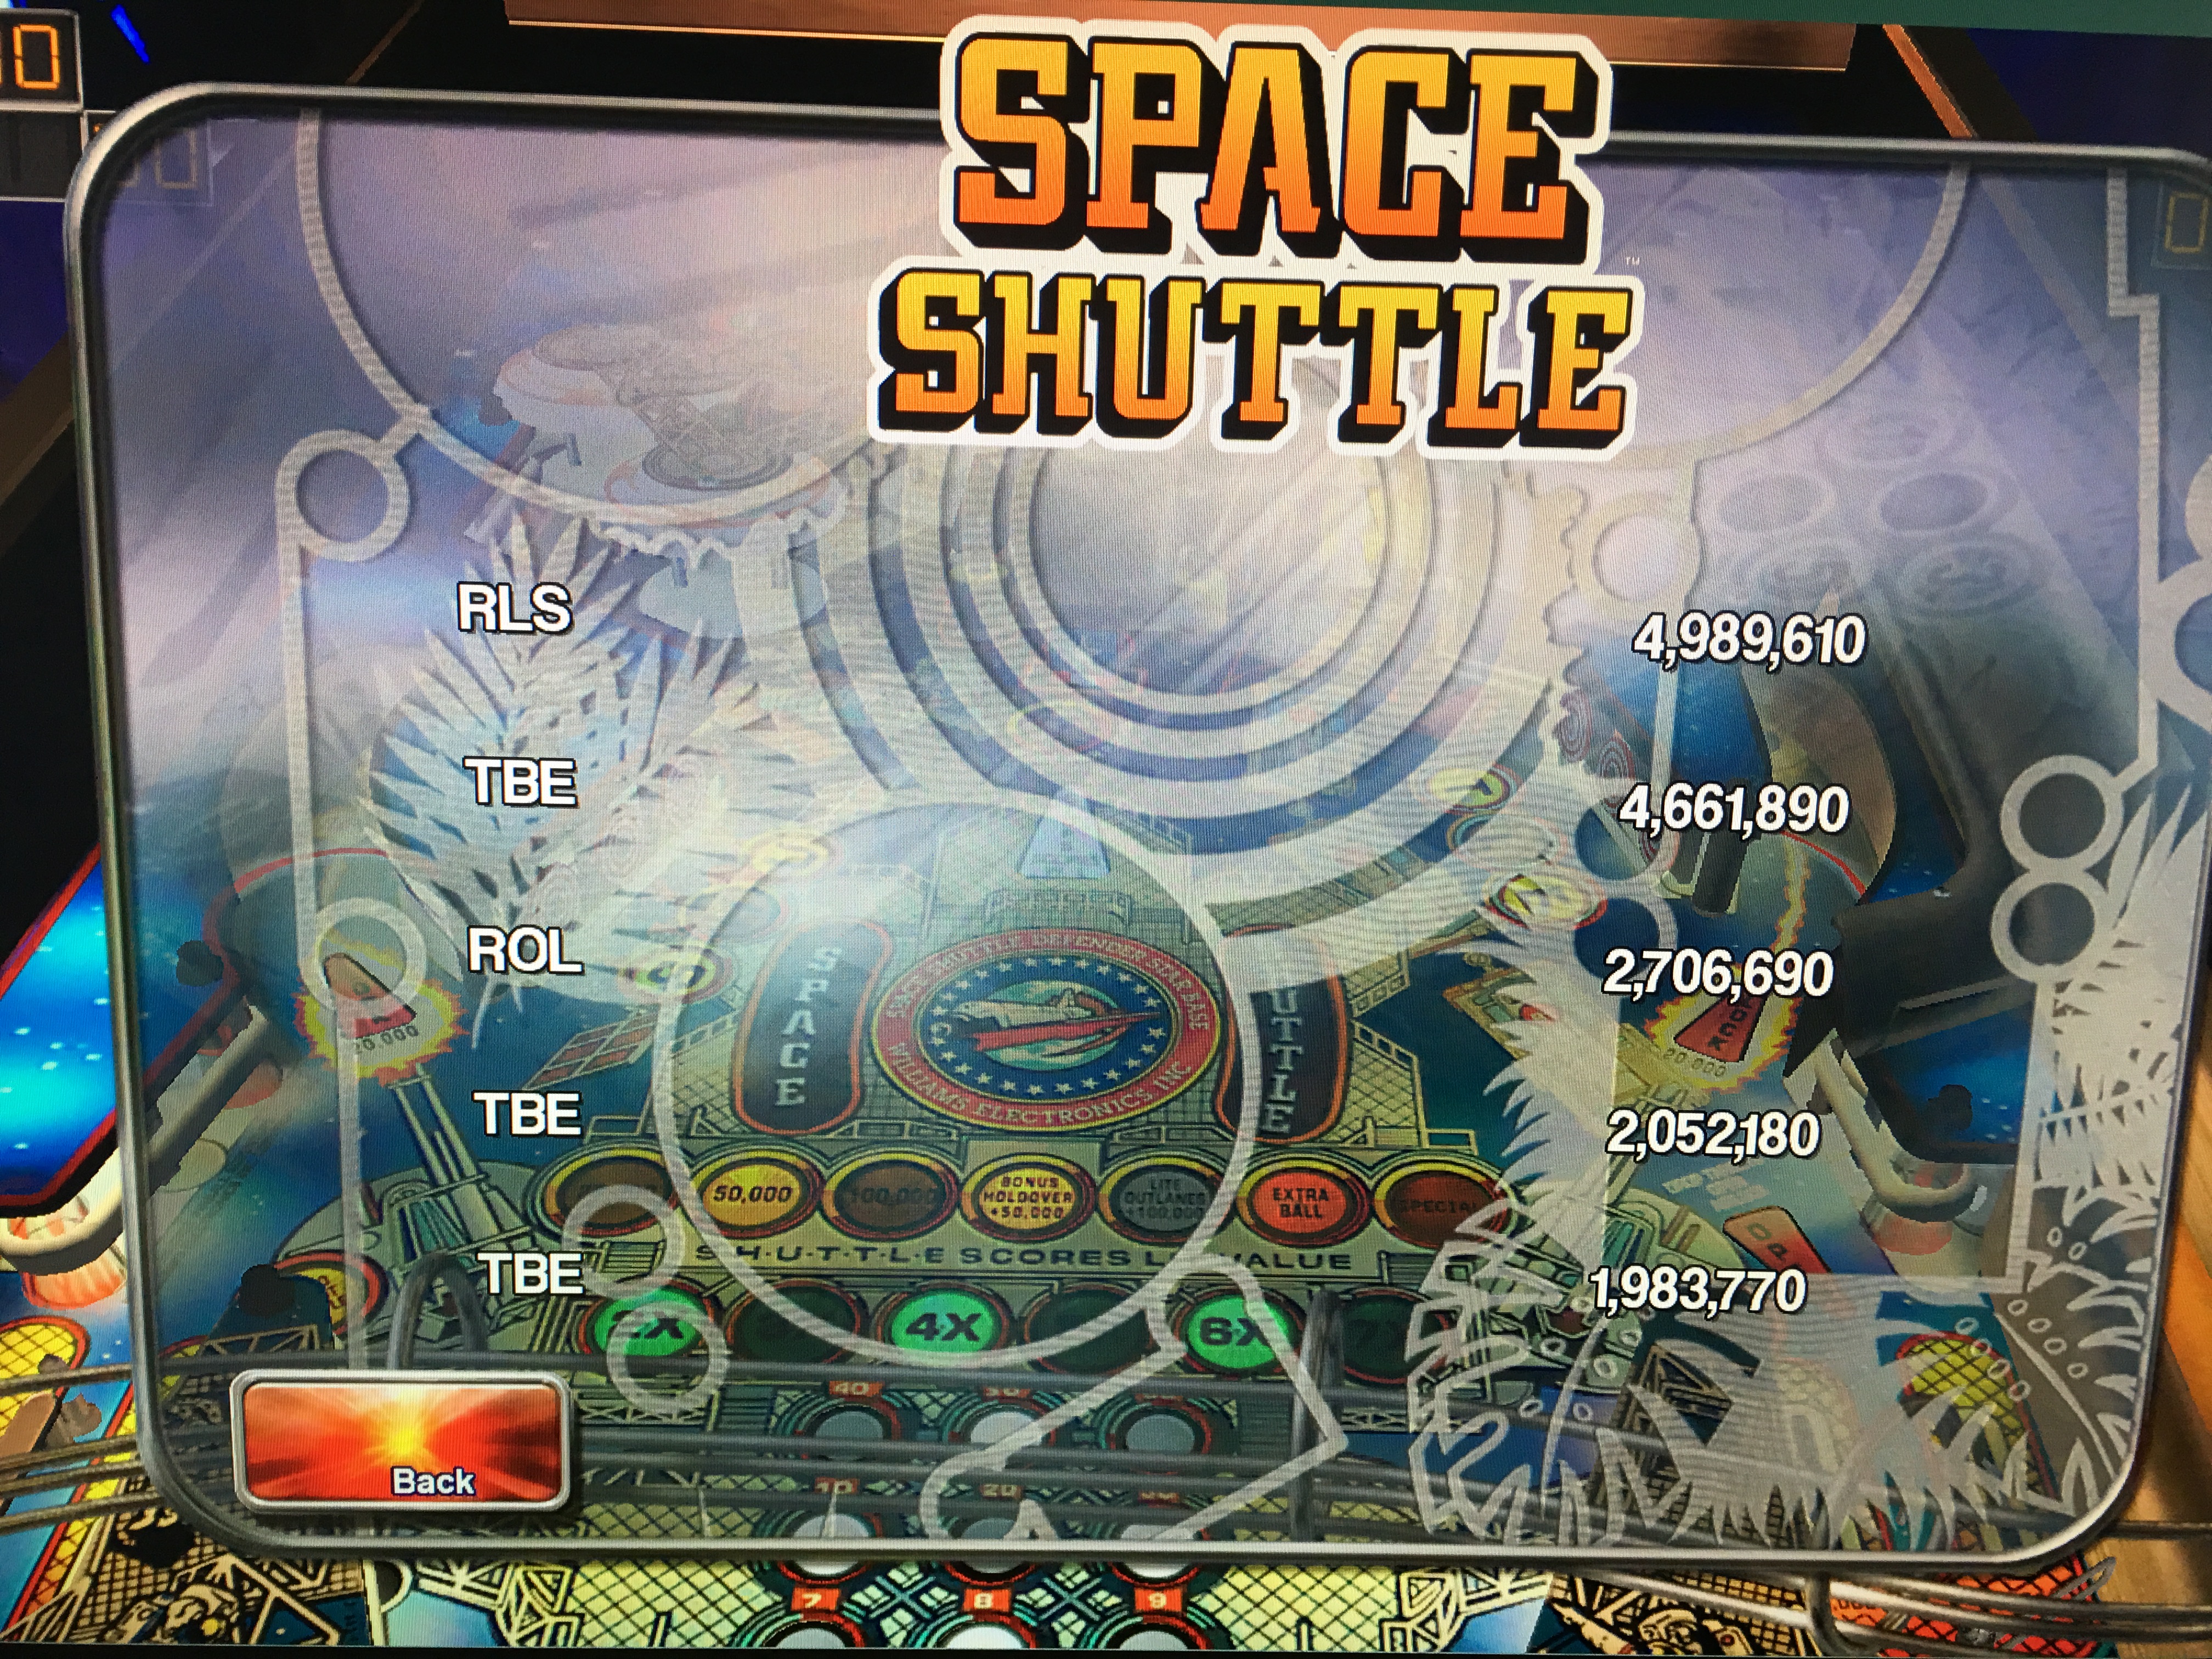 Sixx: Pinball Arcade: Space Shuttle (PC) 4,661,890 points on 2016-06-03 15:15:50